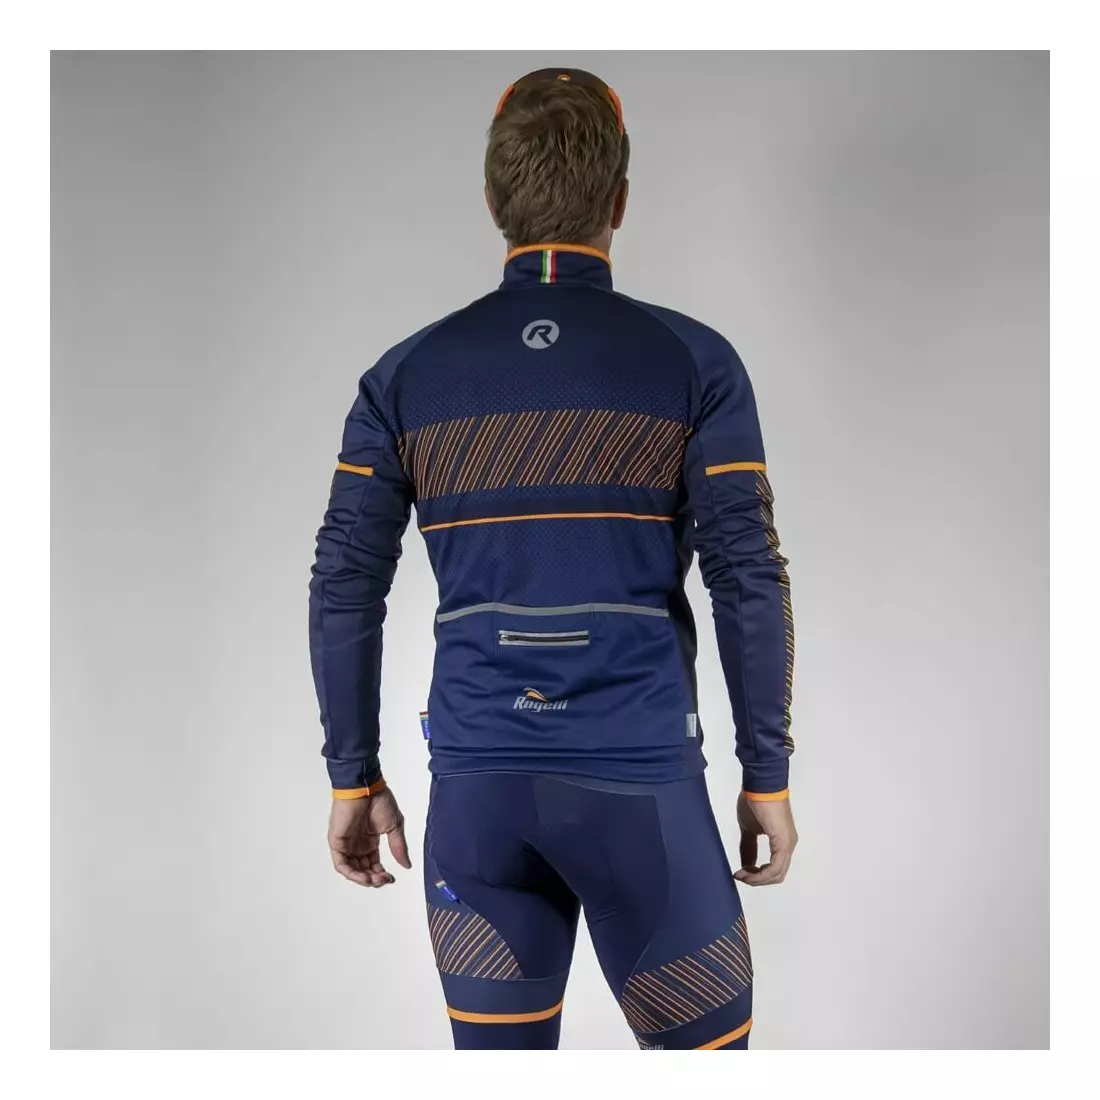 ROGELLI RITMO light insulated bicycle jacket, navy blue-fluo orange